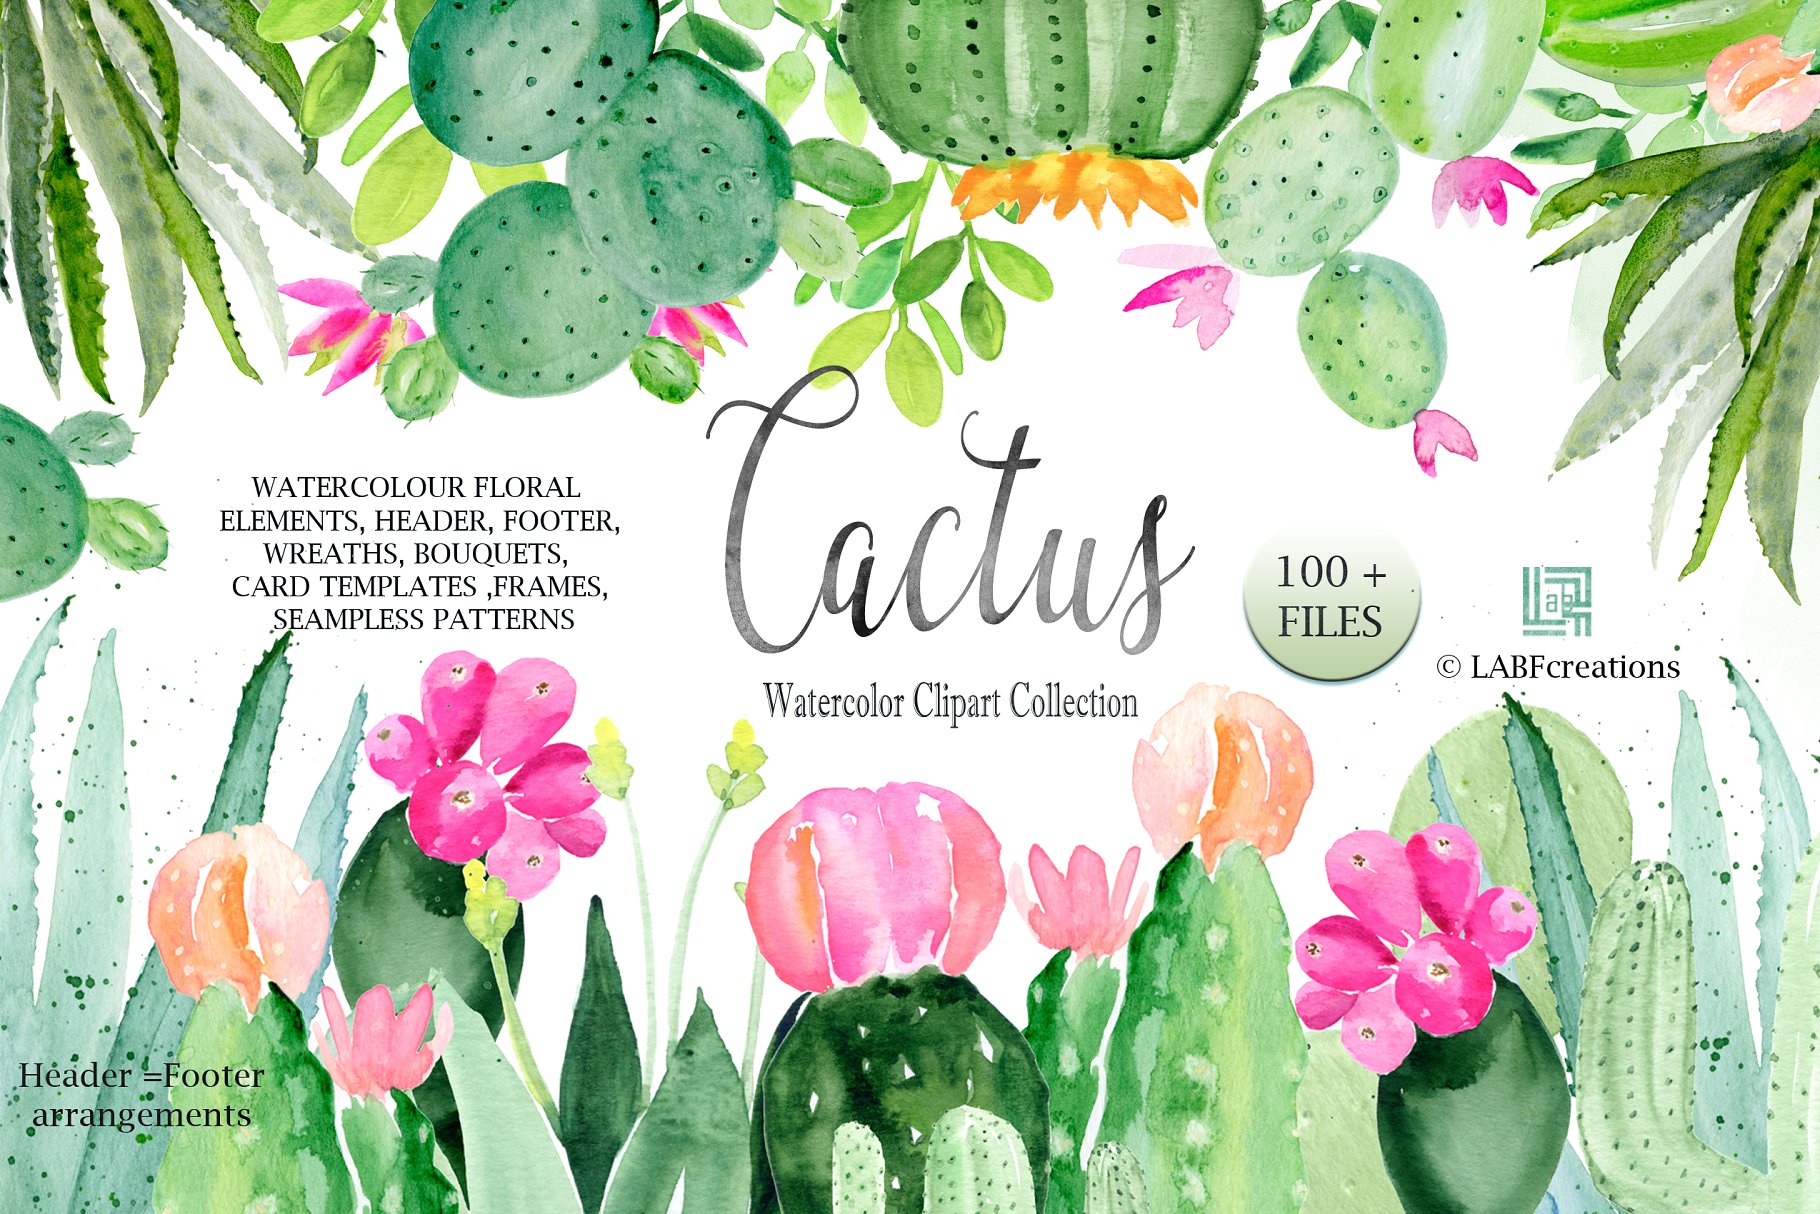 仙人掌水彩剪贴画合集 Cactus watercolr clipart collection插图(3)